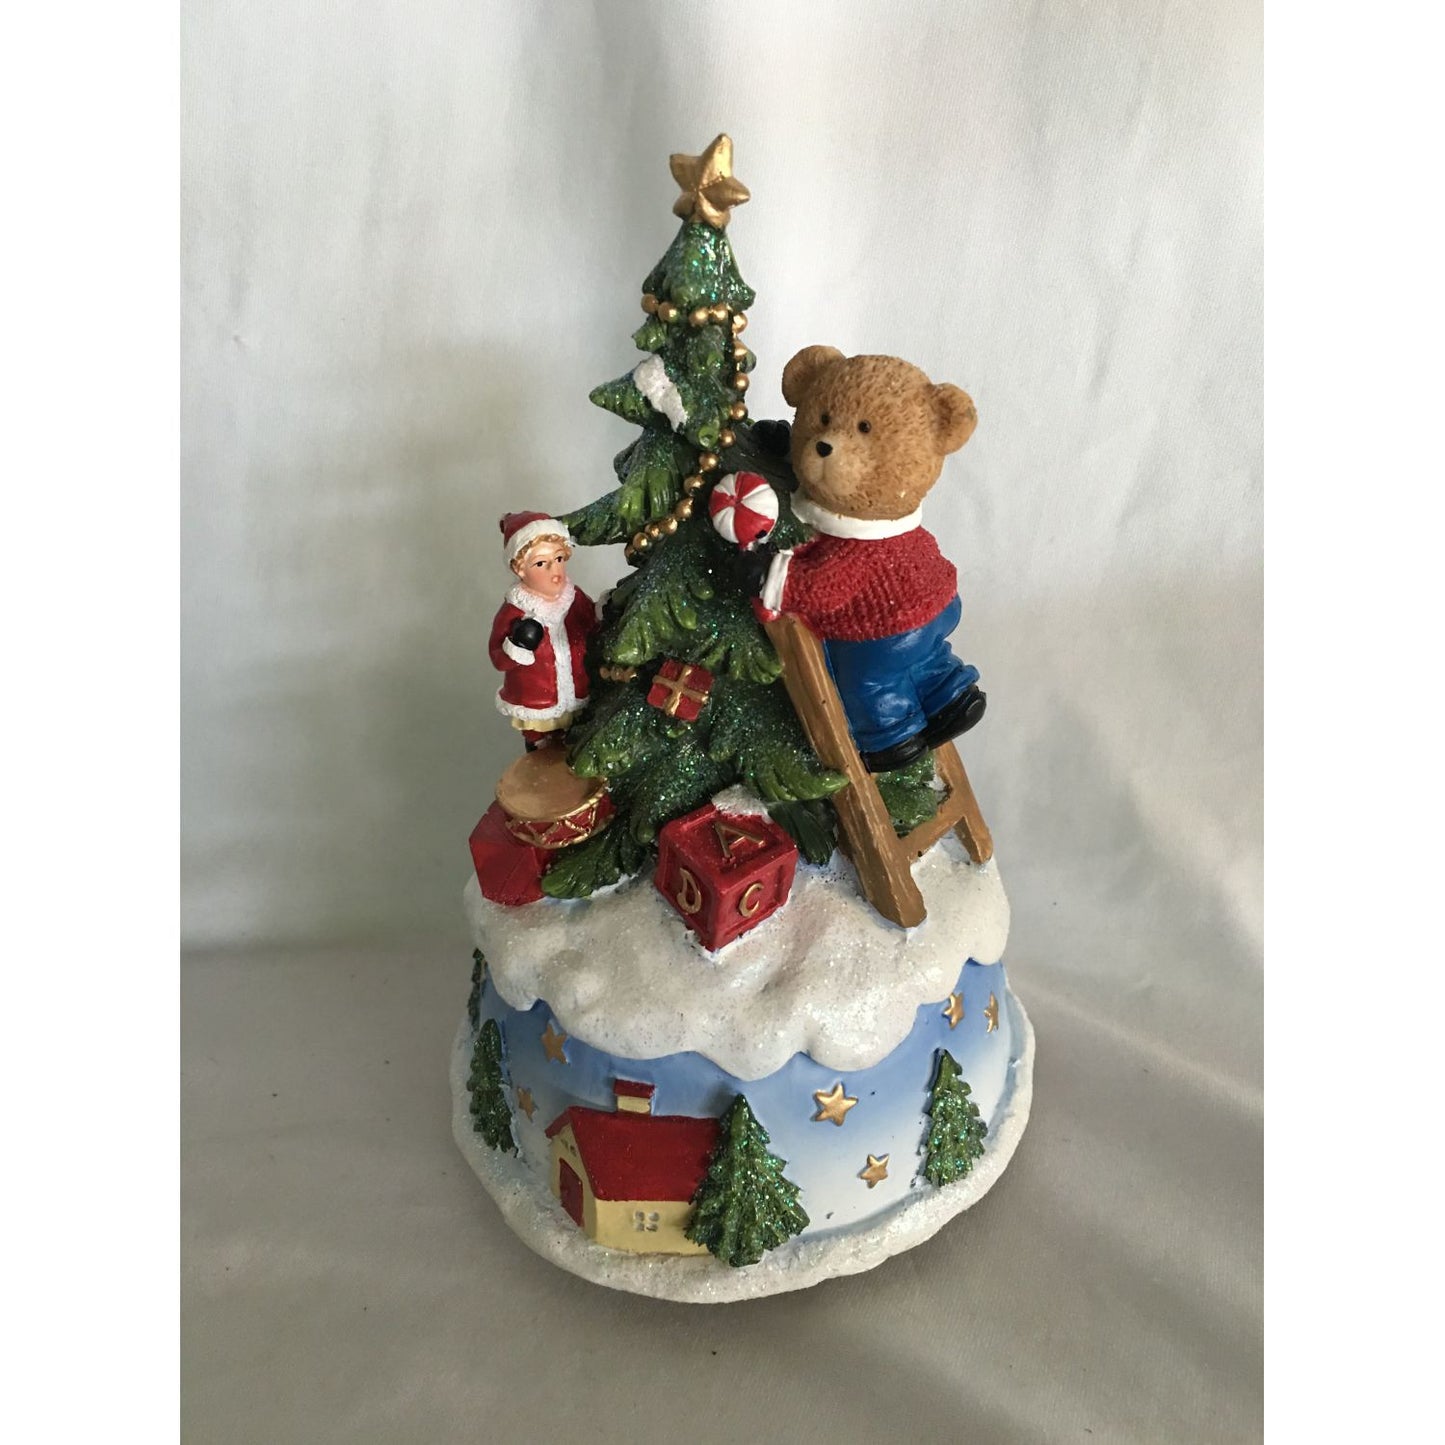 Musicbox Kingdom 6.1" Music Box Bear Decorating The Christmas Tree